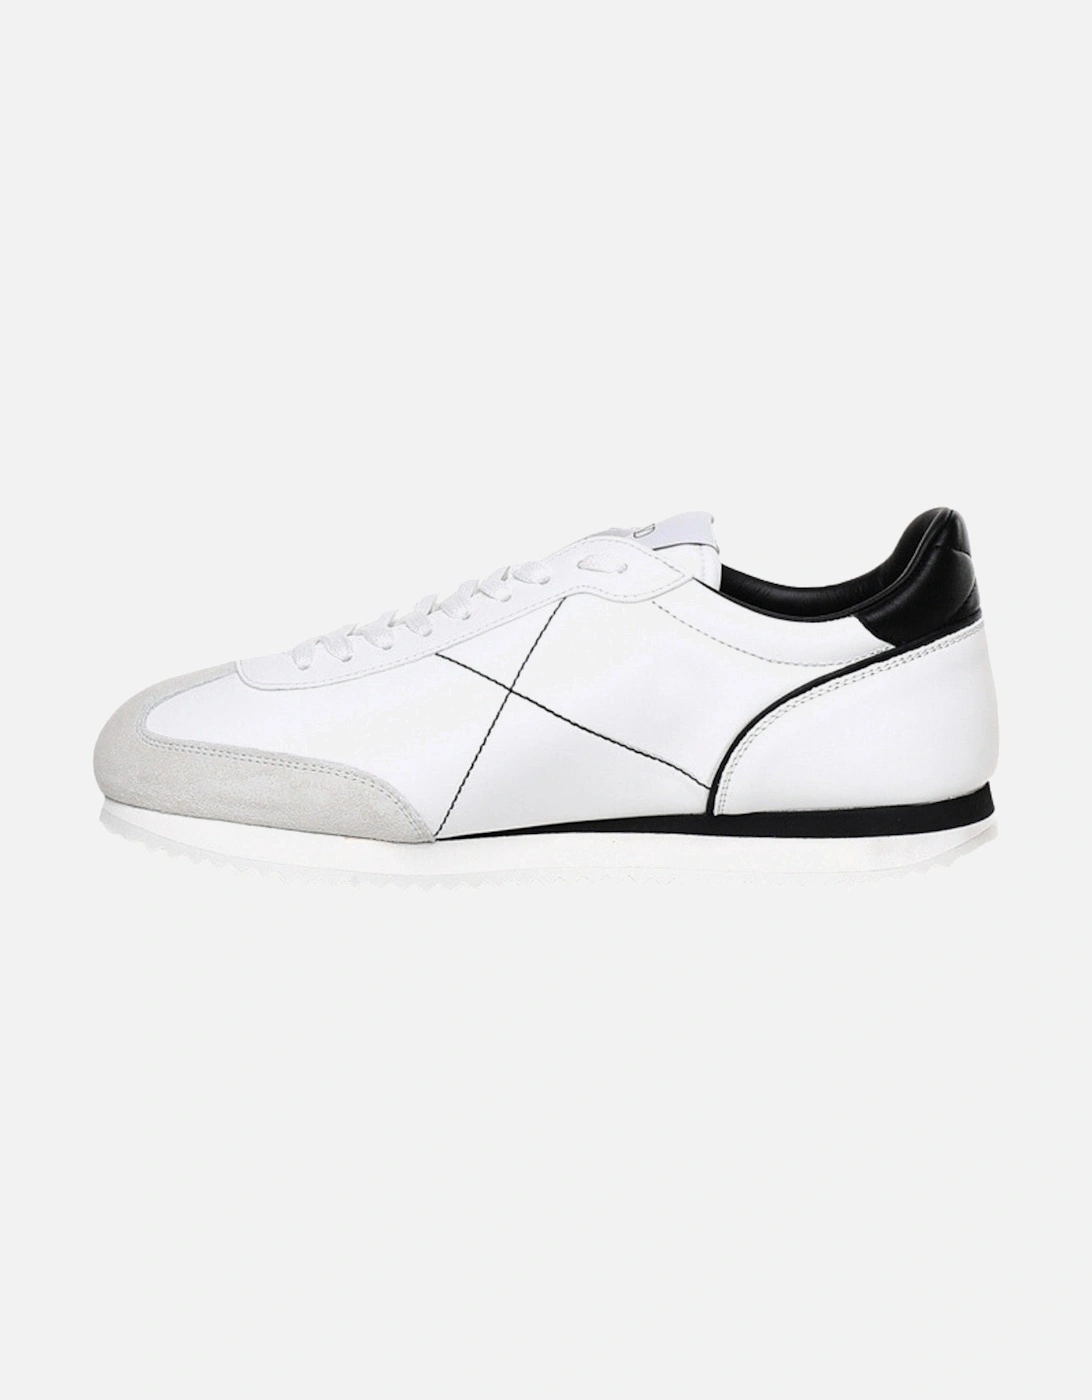 Garavani Retro Max Stud White Sneakers